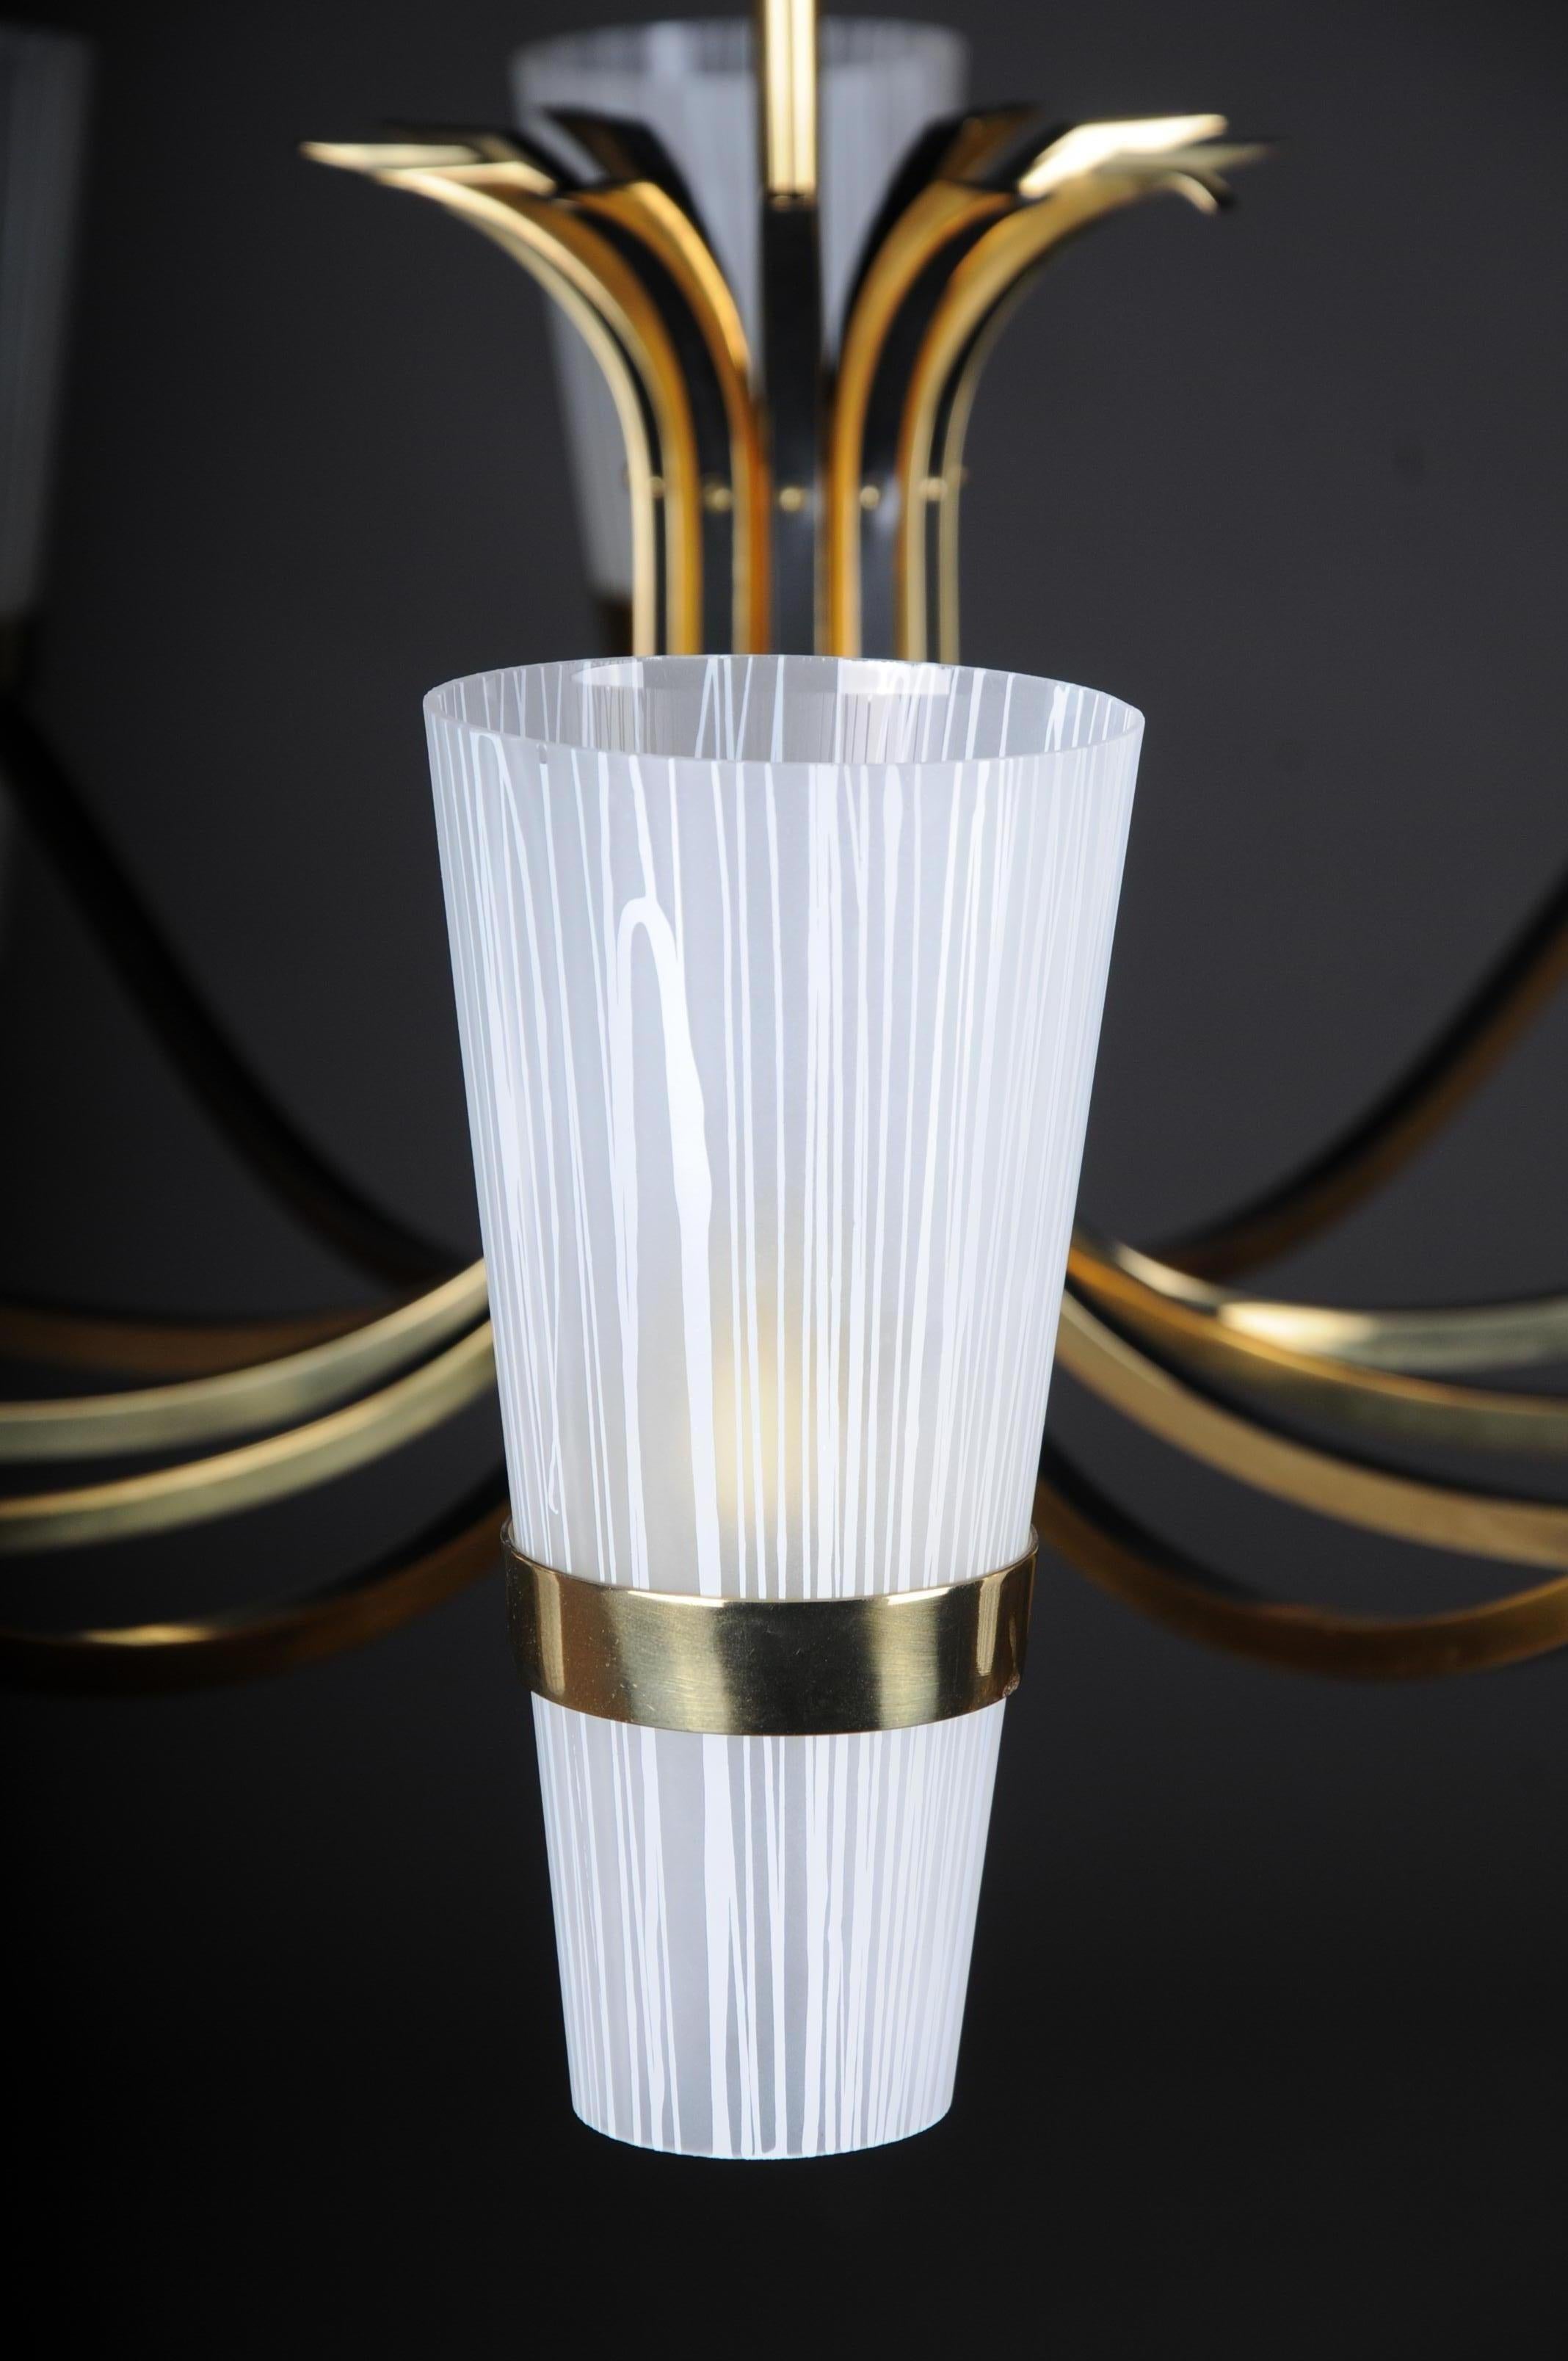 Vintage-Designer-Taschenlampe, Sputnik, Messing, 1960er Jahre.

Massiver vergoldeter Messingkronleuchter mit 12 Armen, elektrifiziert. Messingkörper Äußerst dekorativer Designer-Kronleuchter mit hochwertiger Verarbeitung. Alle 12 Arme haben eine